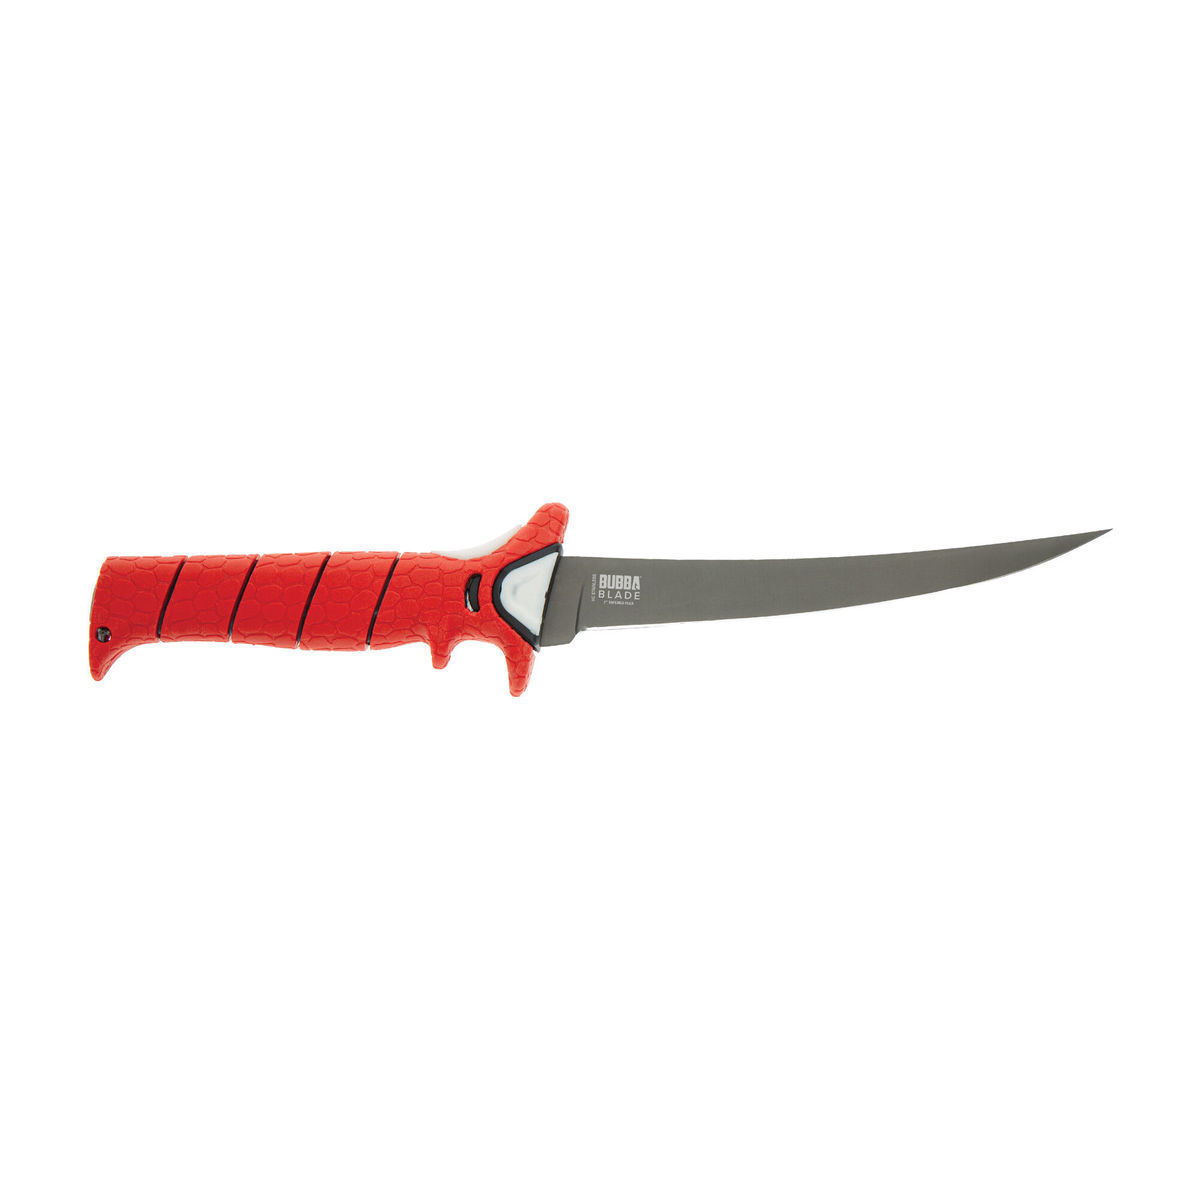 https://www.sportsmans.com/medias/bubba-multi-flex-interchangeable-blade-fillet-knife-kit-1626629-1.jpg?context=bWFzdGVyfGltYWdlc3wzOTYxOHxpbWFnZS9qcGVnfGltYWdlcy9oODgvaDhmLzkxOTU0NTE2Nzg3NTAuanBnfGJjNzhhMTVkMWVkZWY1MGU3MDhmZDFhZTIwODg3ZTg3ZGJhZWMwNDQ0MzVlYTMxNGM0M2M2ZGMyMTVkNjA4ZjU